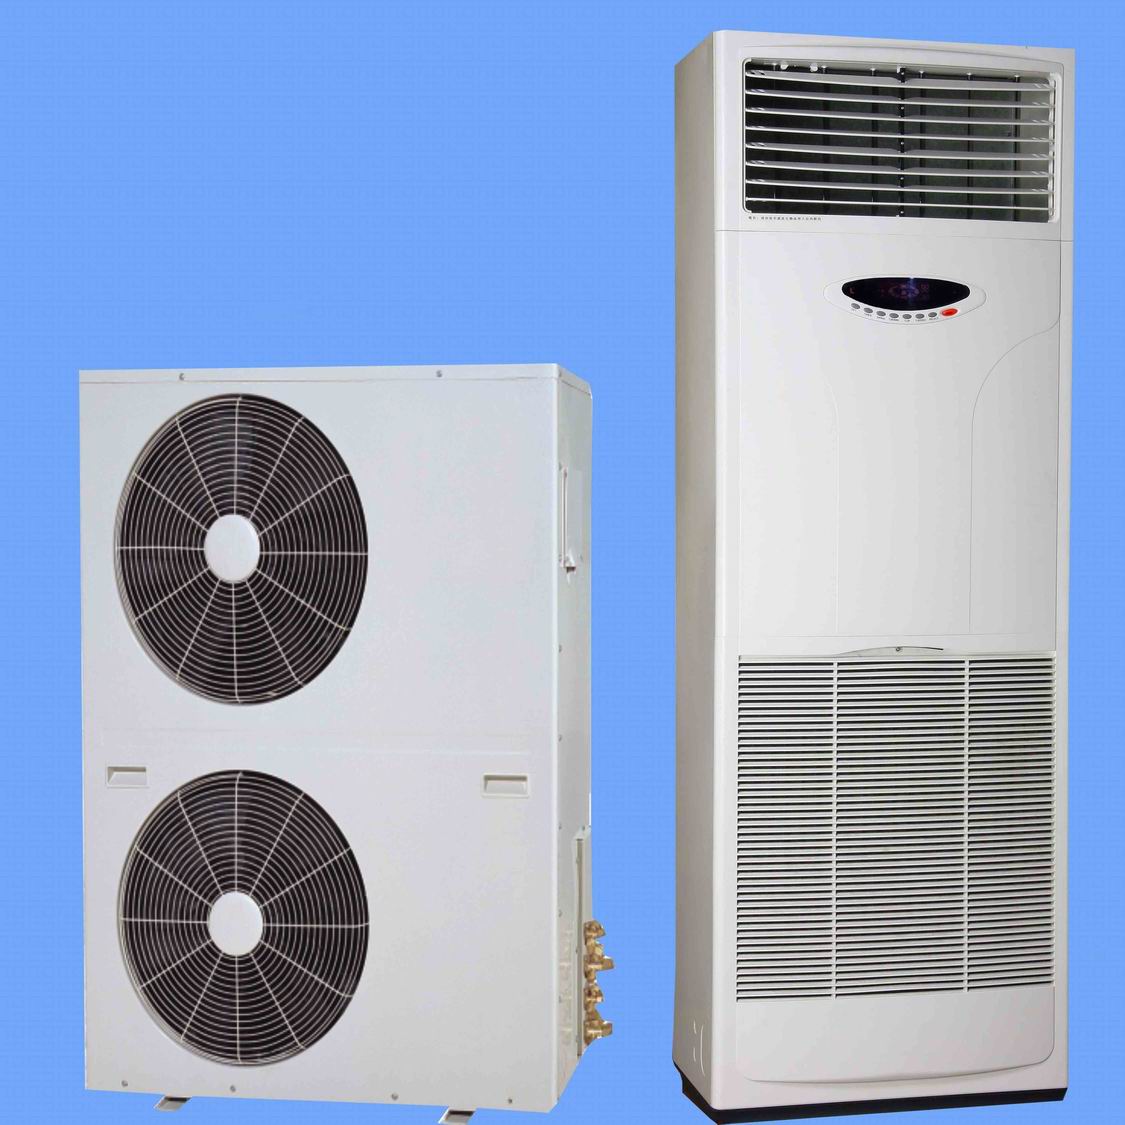 standing air conditioner unit